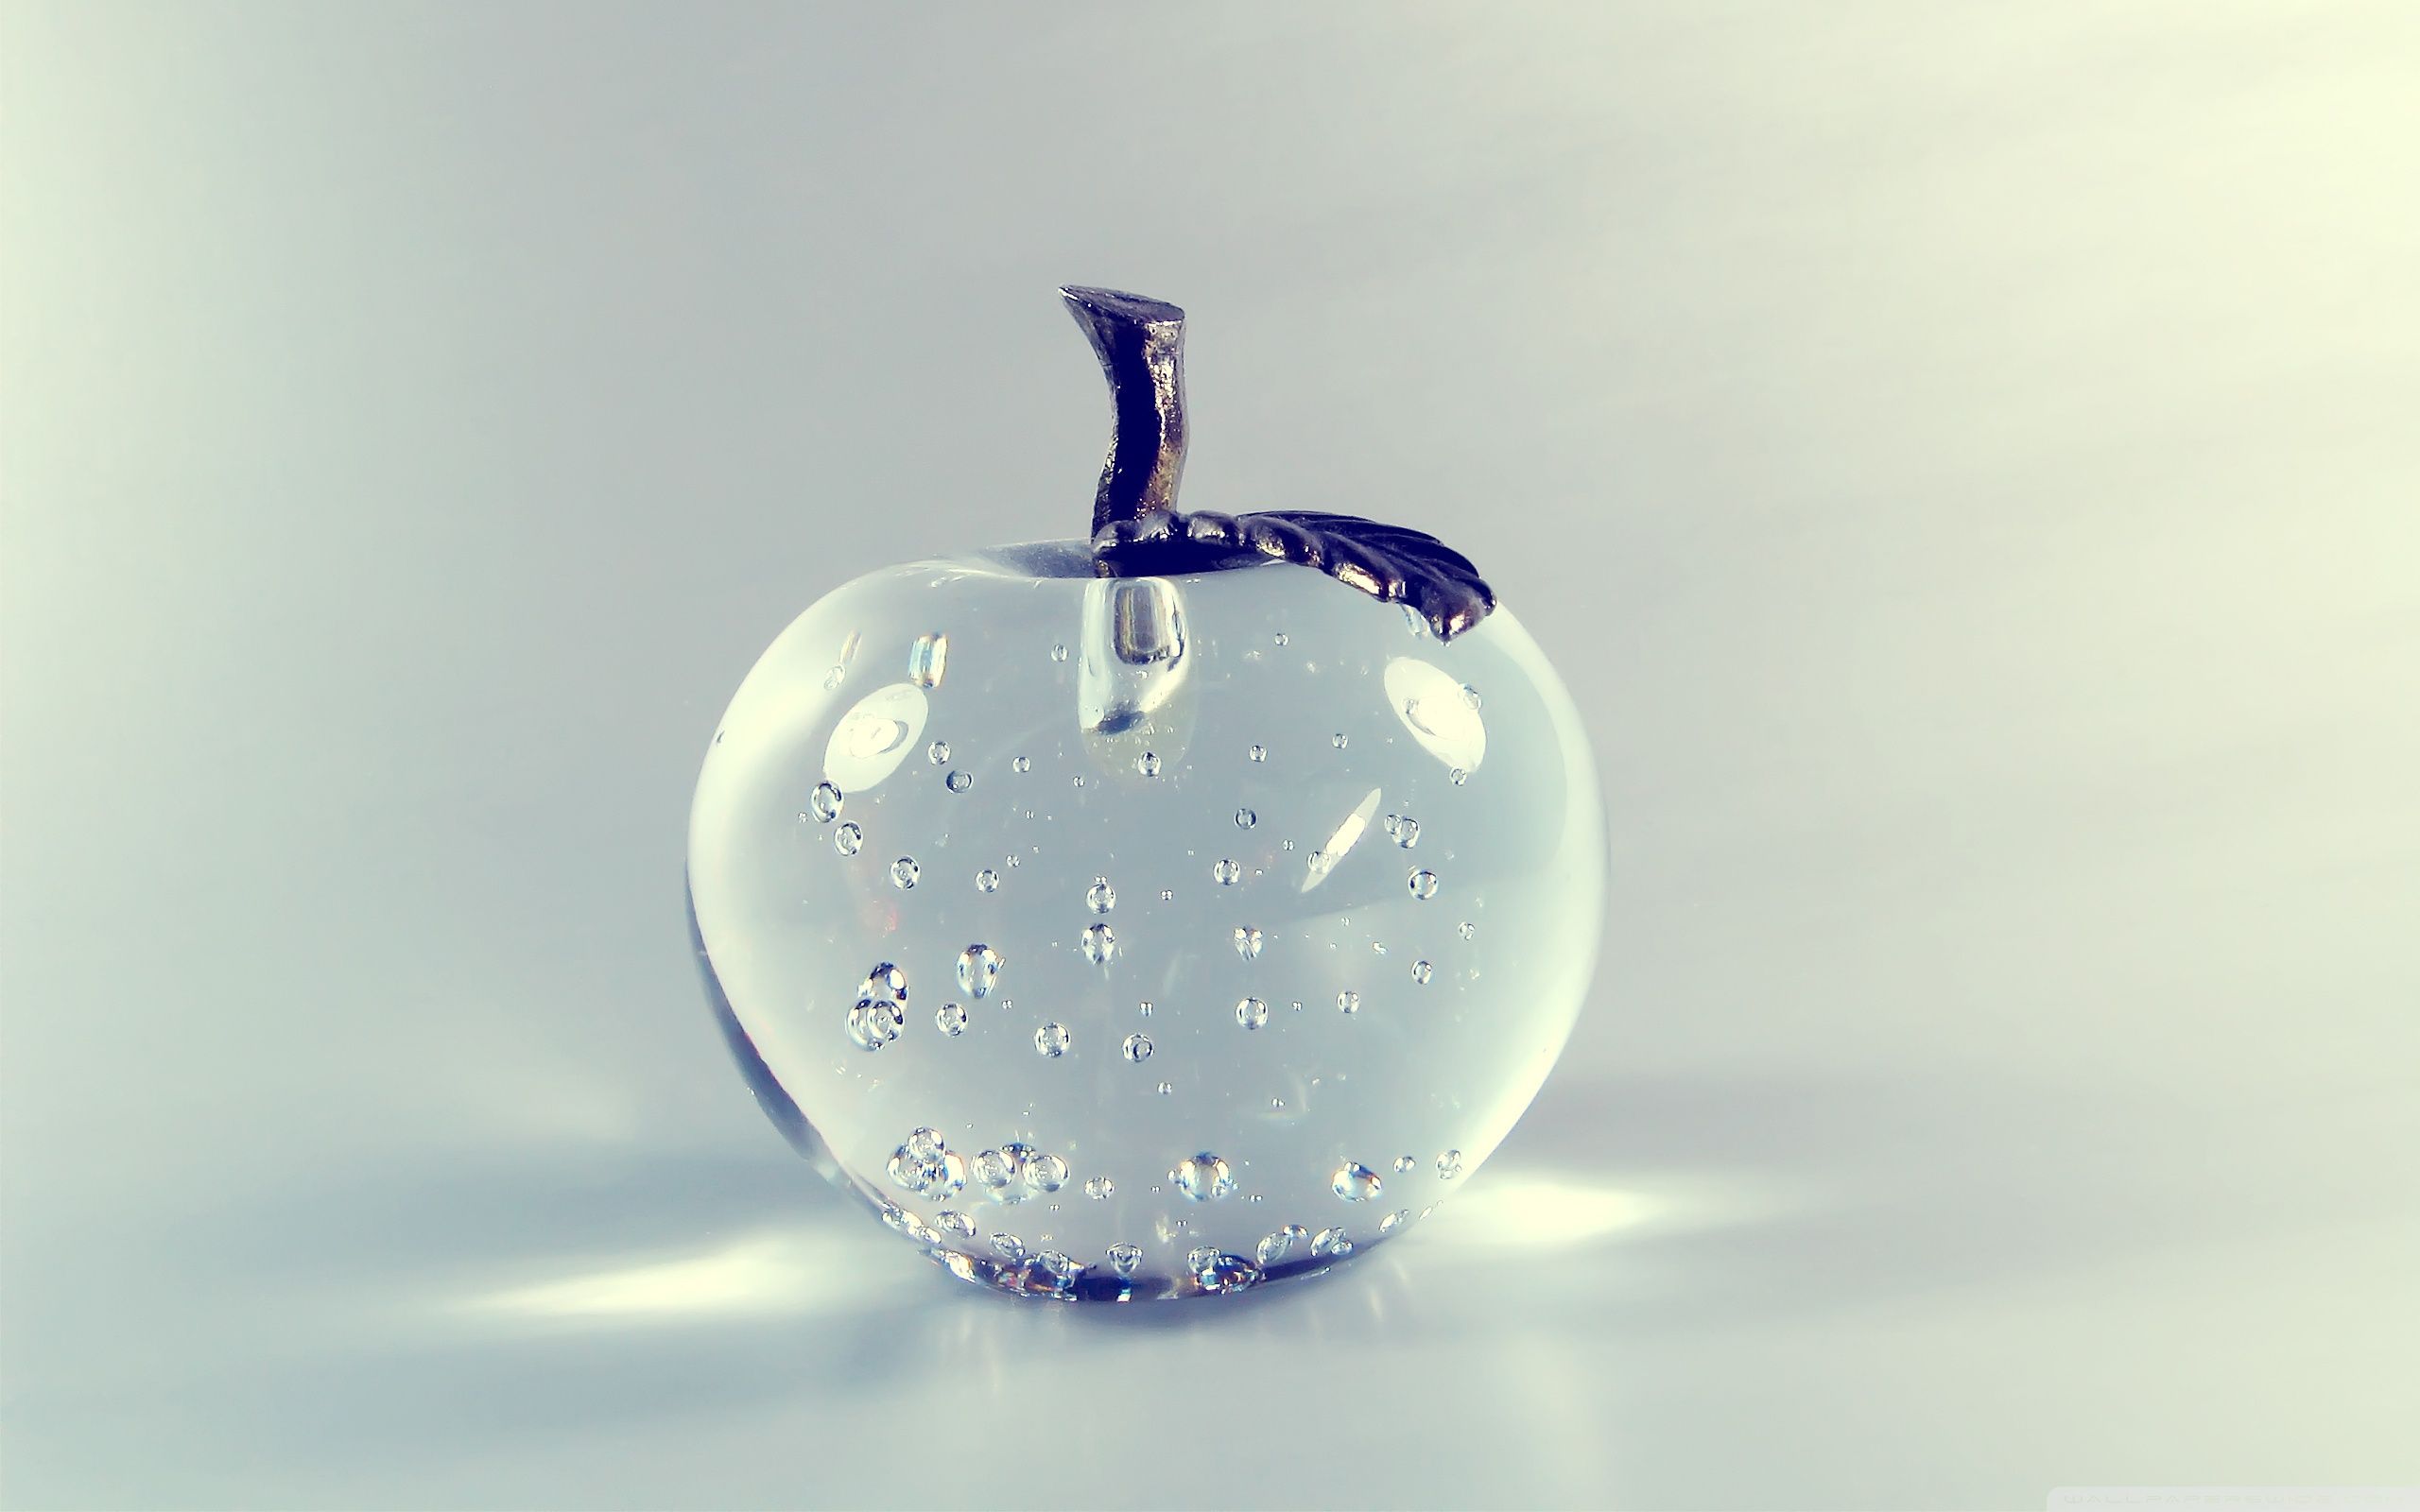 General 2560x1600 fruit glass water drops apples simple background digital art